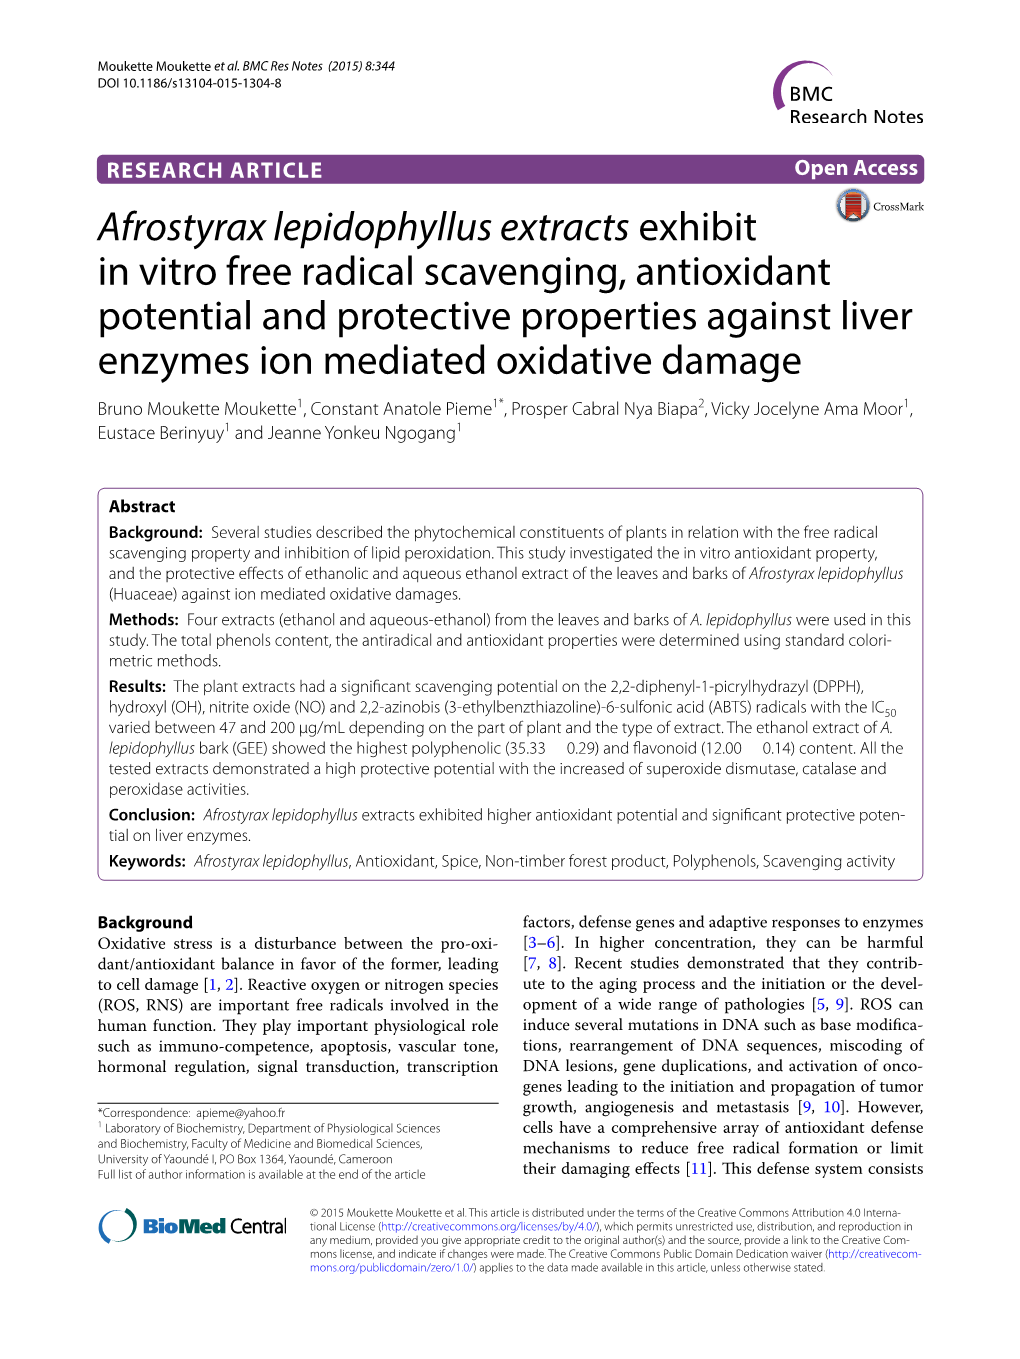 Afrostyrax Lepidophyllus Extracts Exhibit in Vitro Free Radical